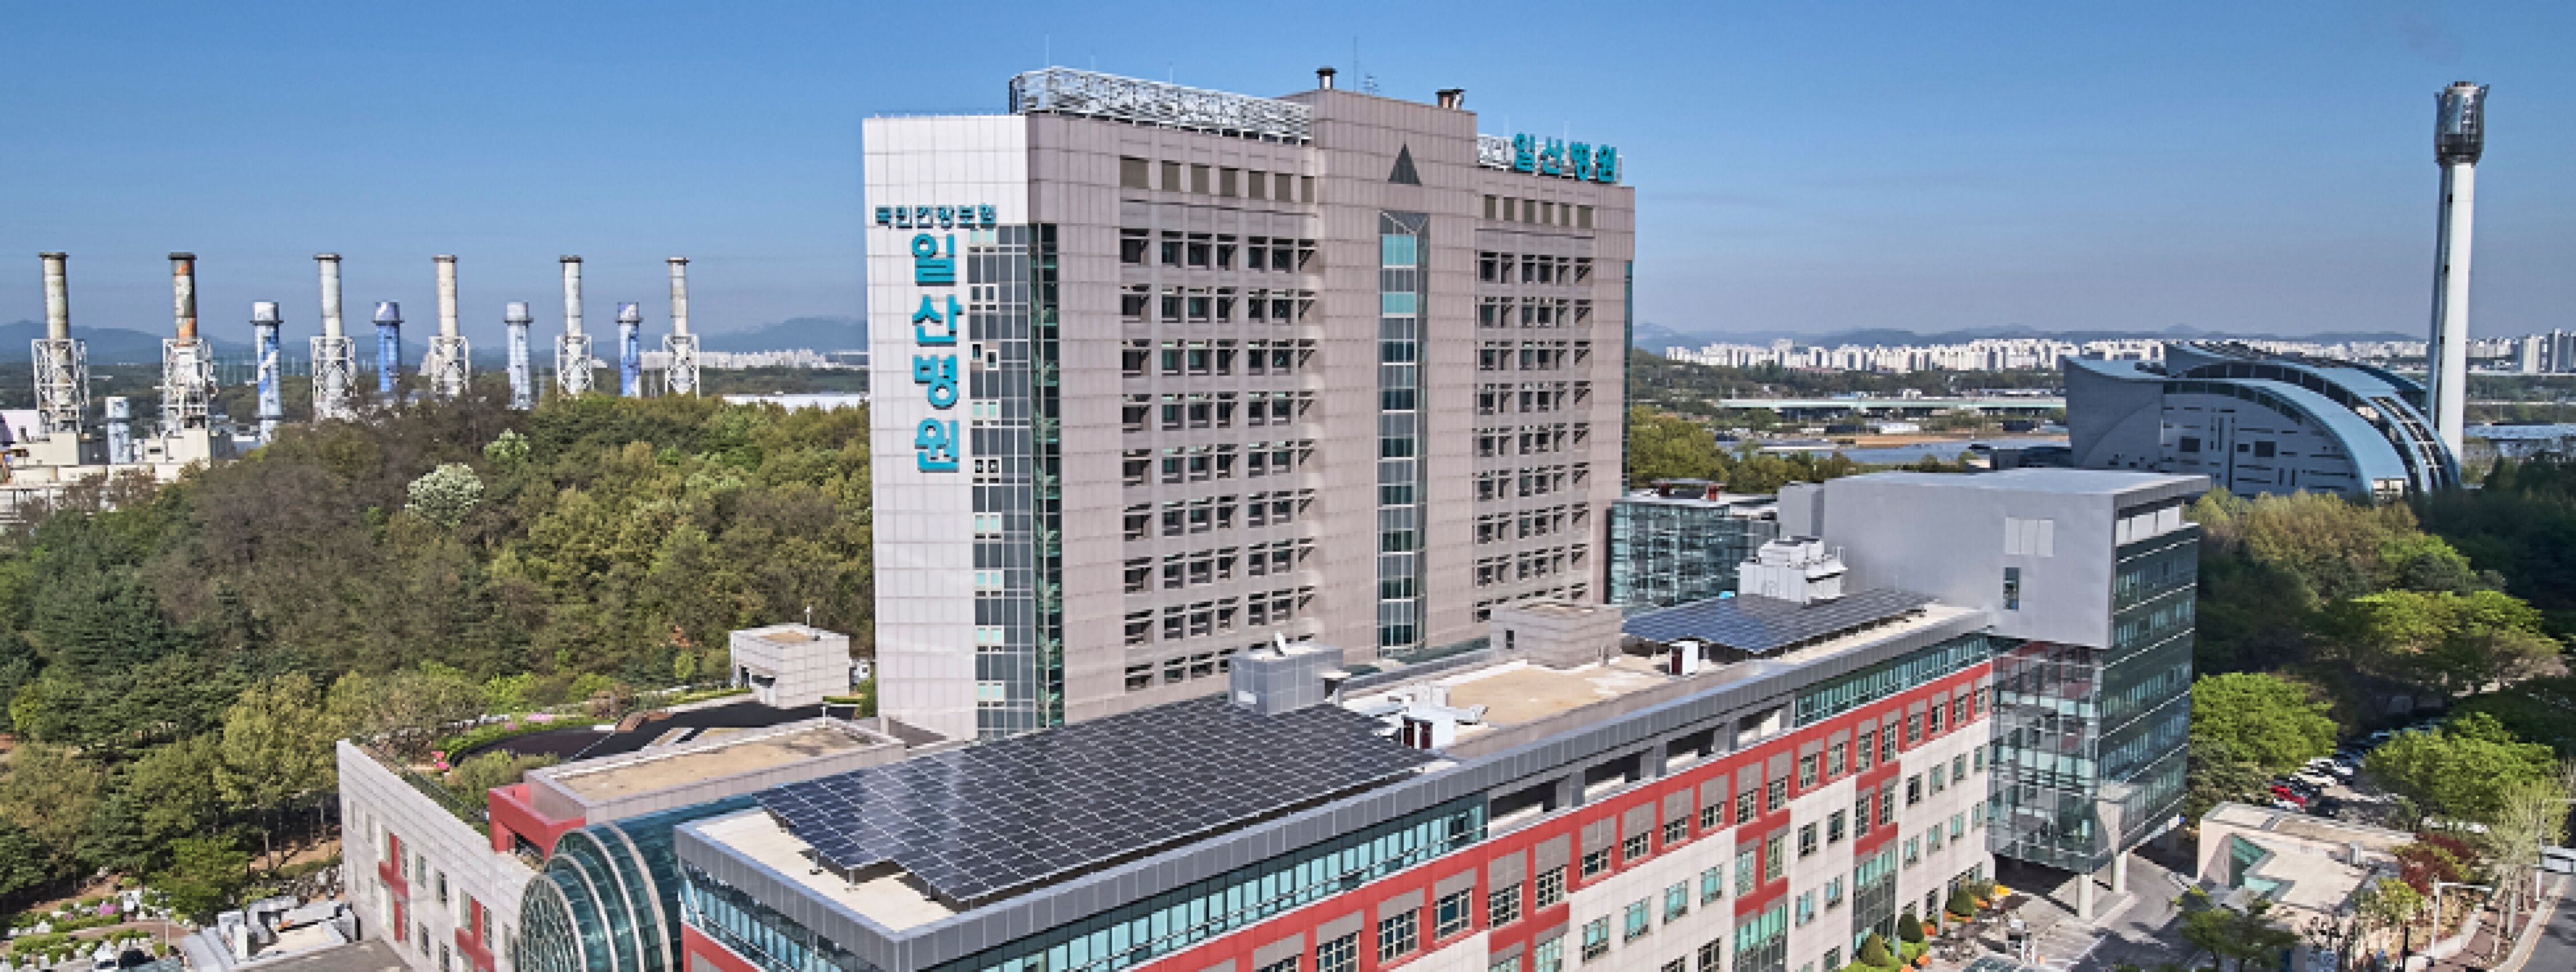 Ilsan hospital, Südkorea